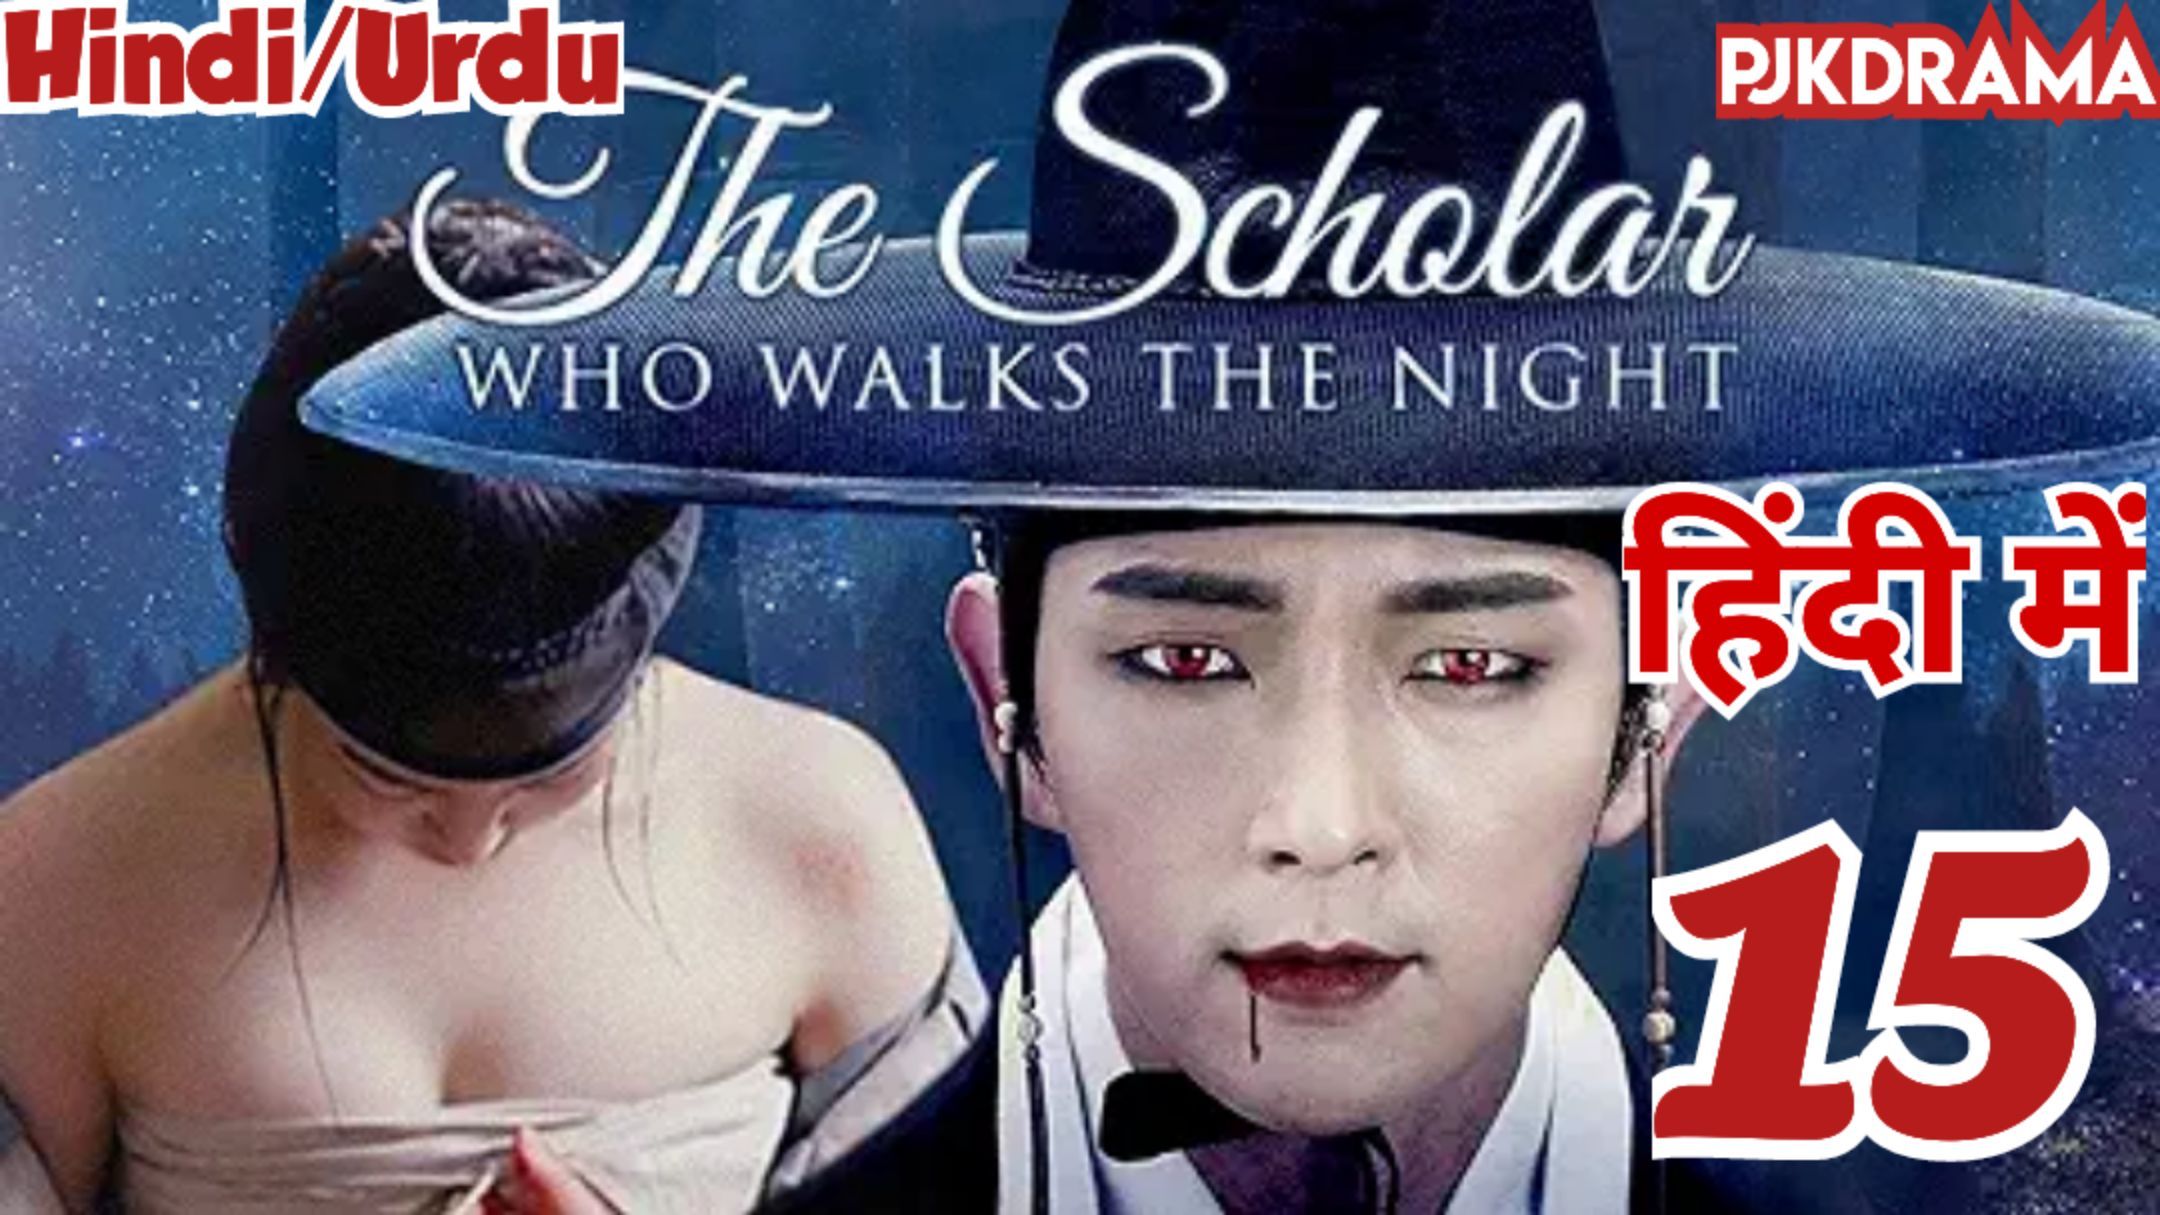 The Scholars of Night